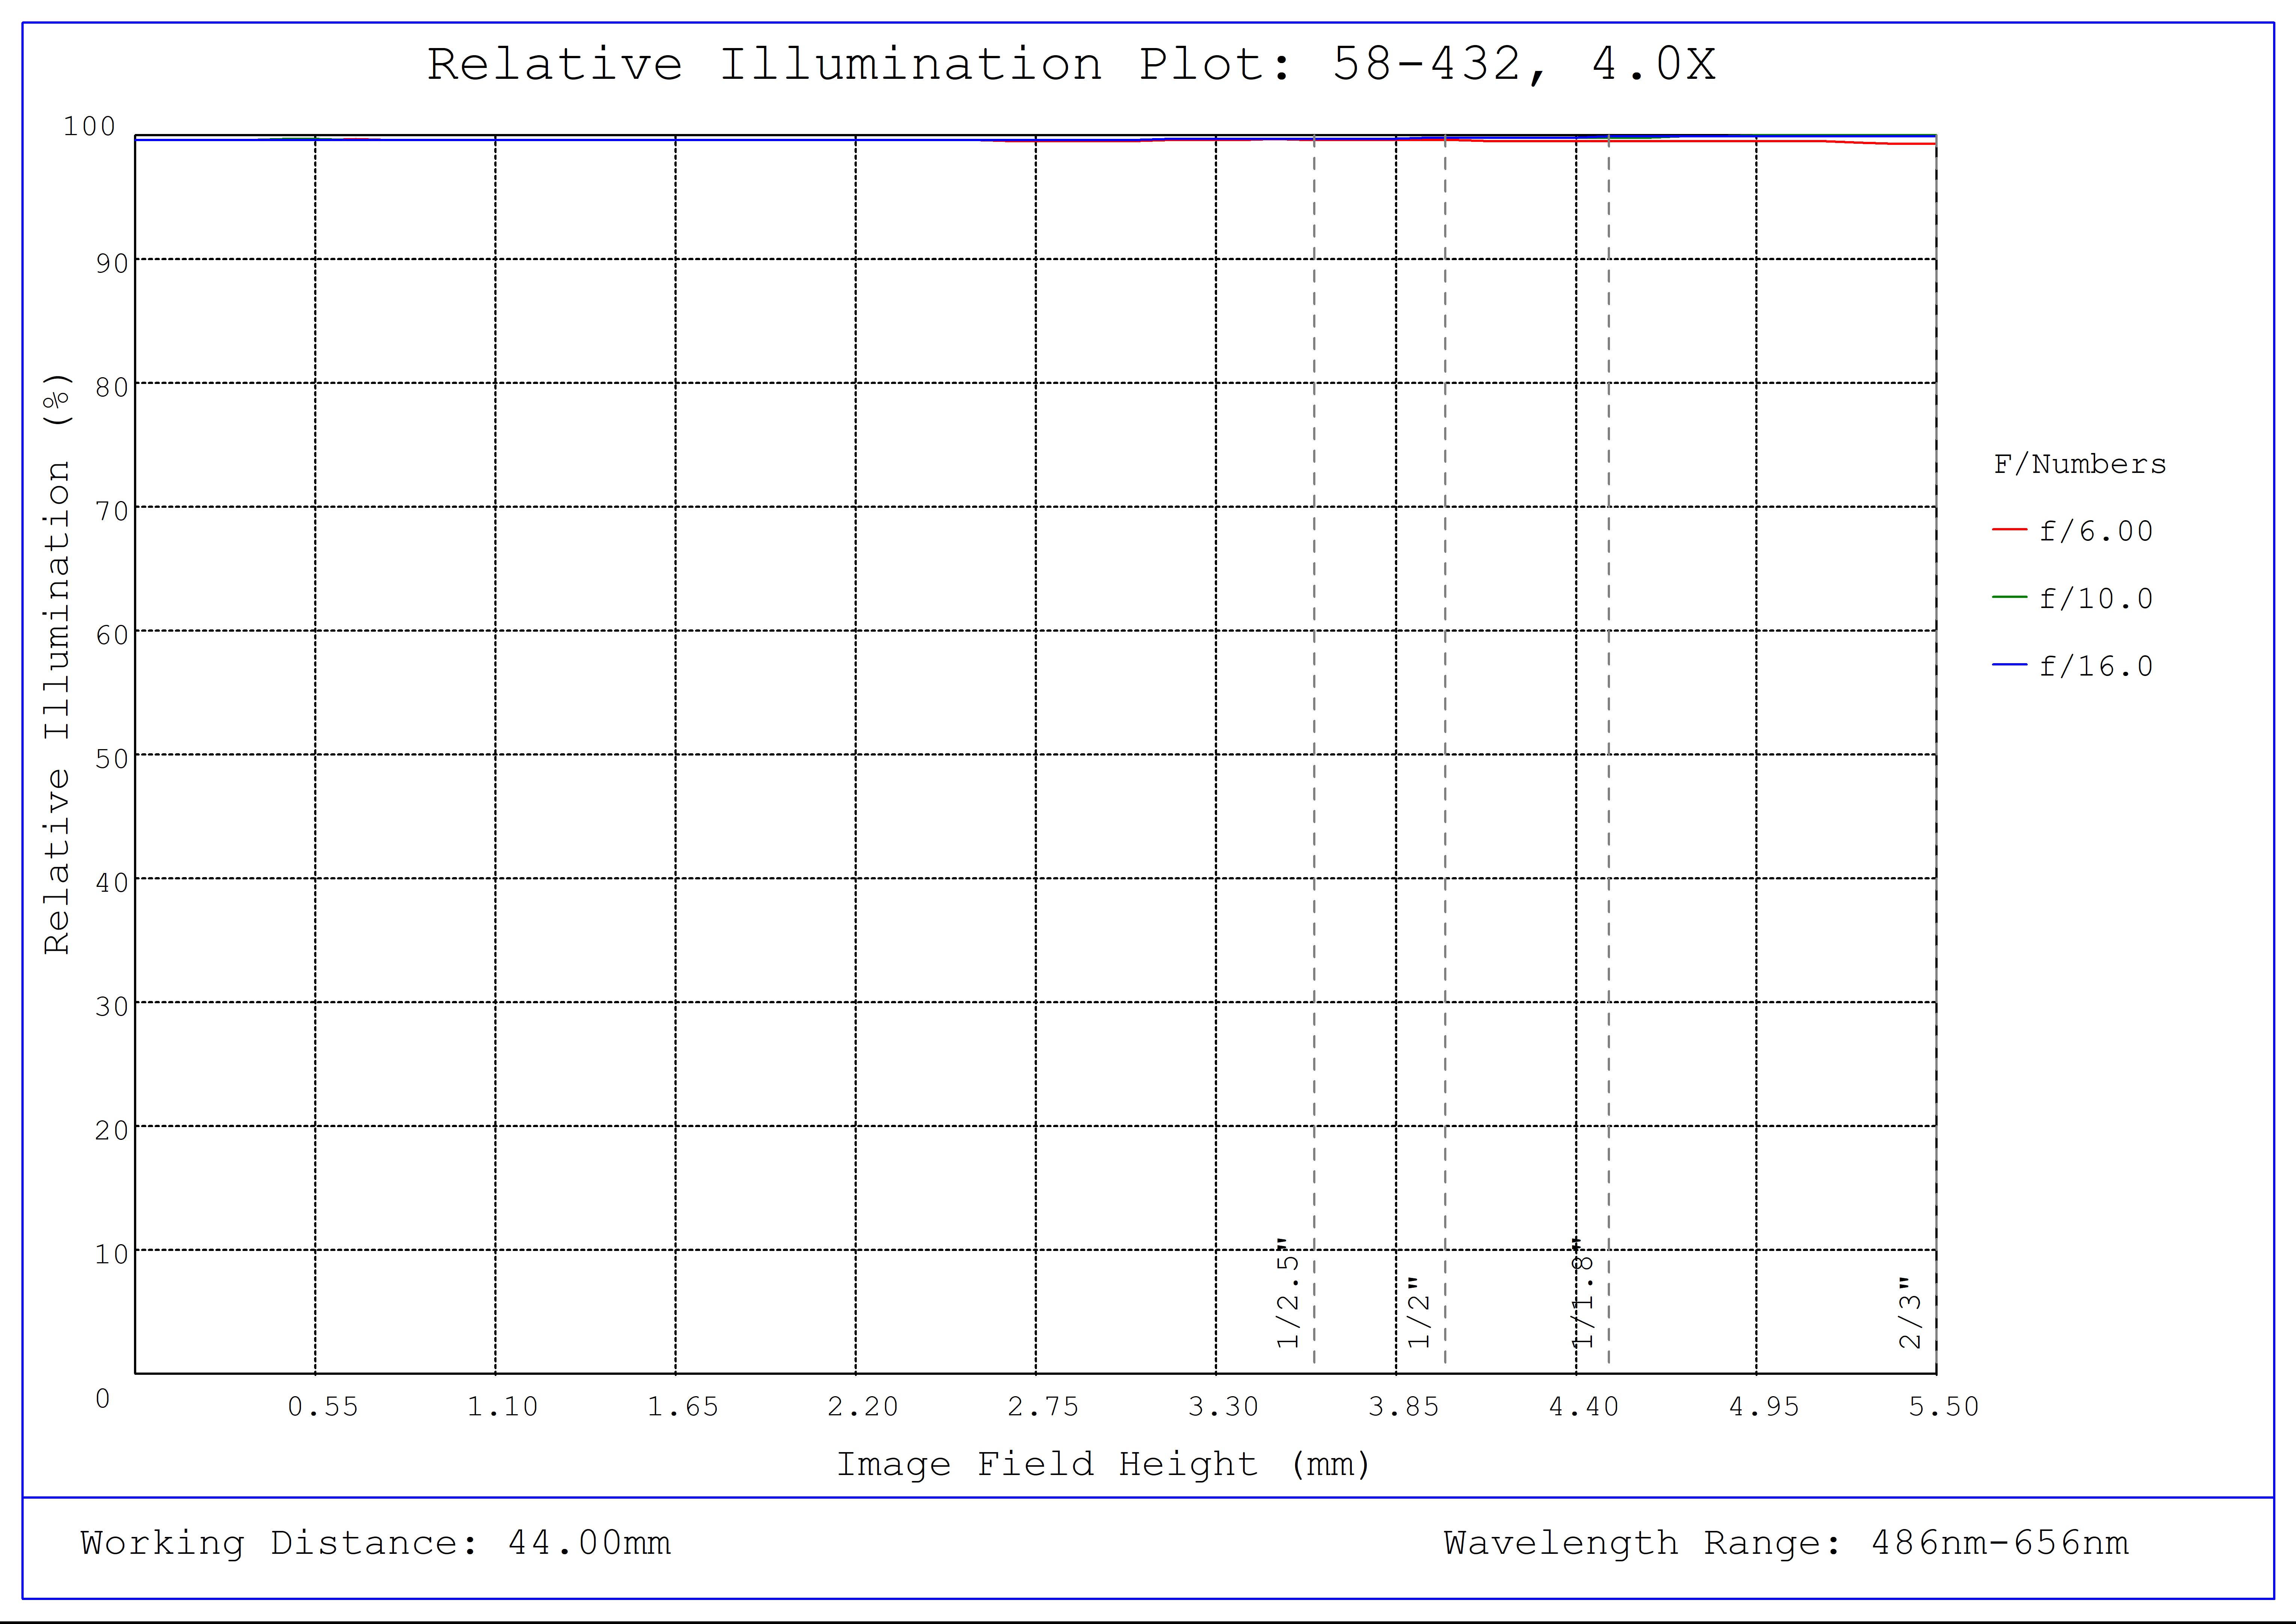 #58-432, 4.0X SilverTL™ Telecentric Lens, Relative Illumination Plot